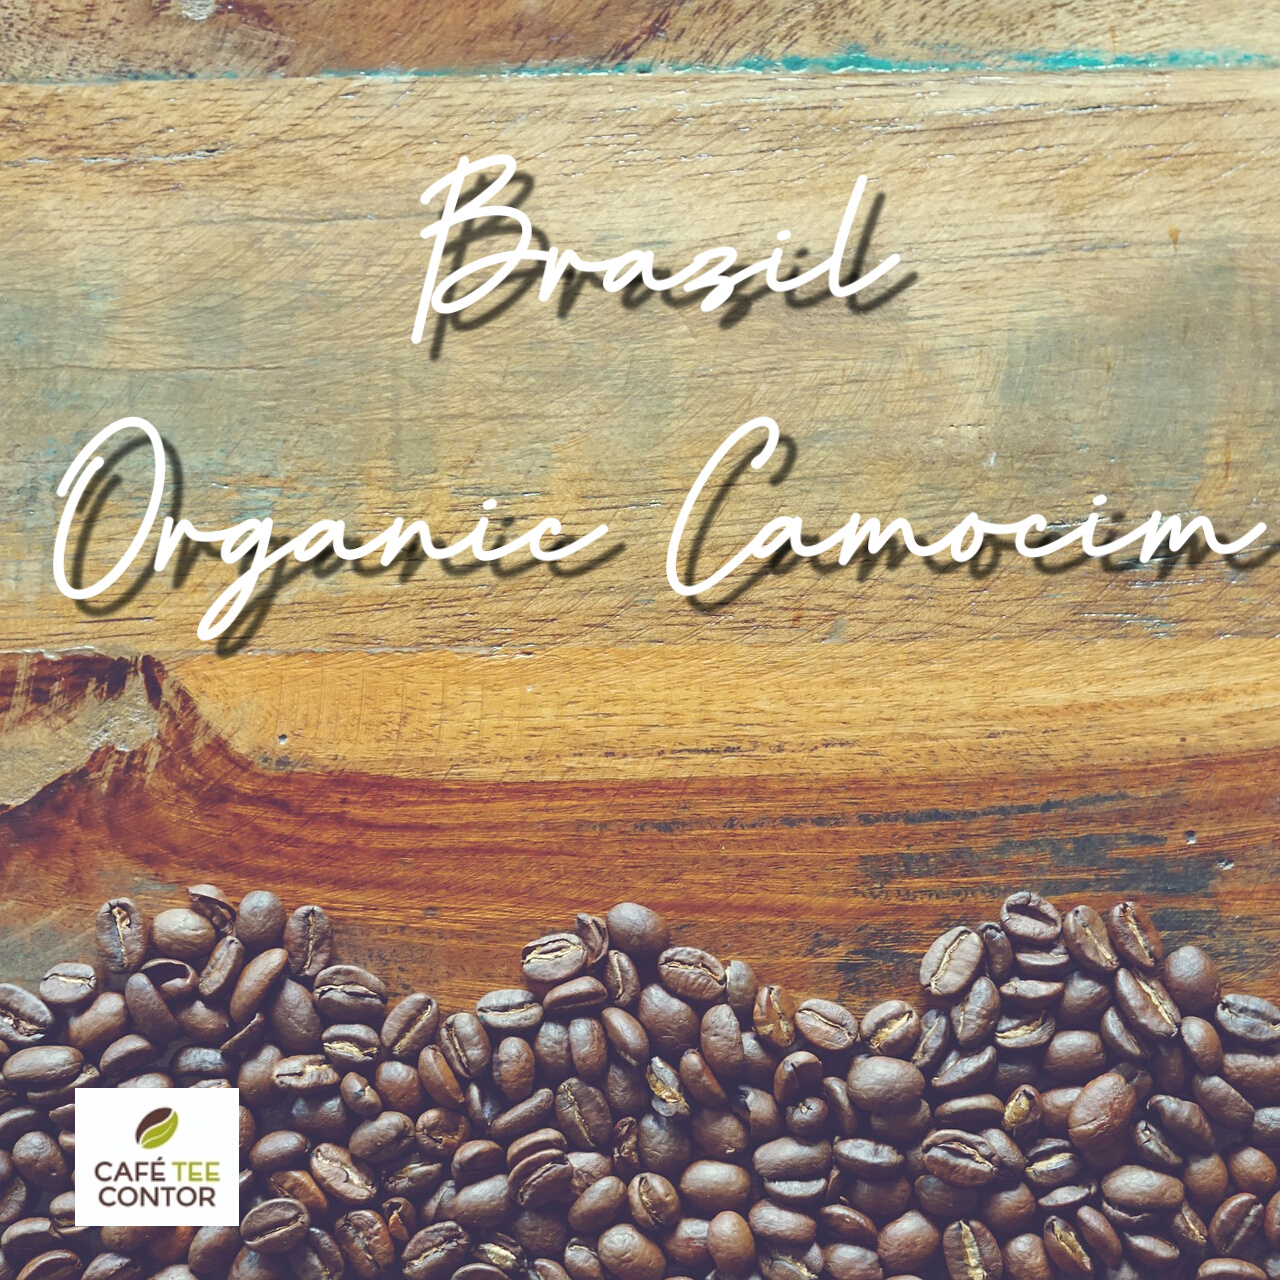 Kaffee Brazil Organic Camocim